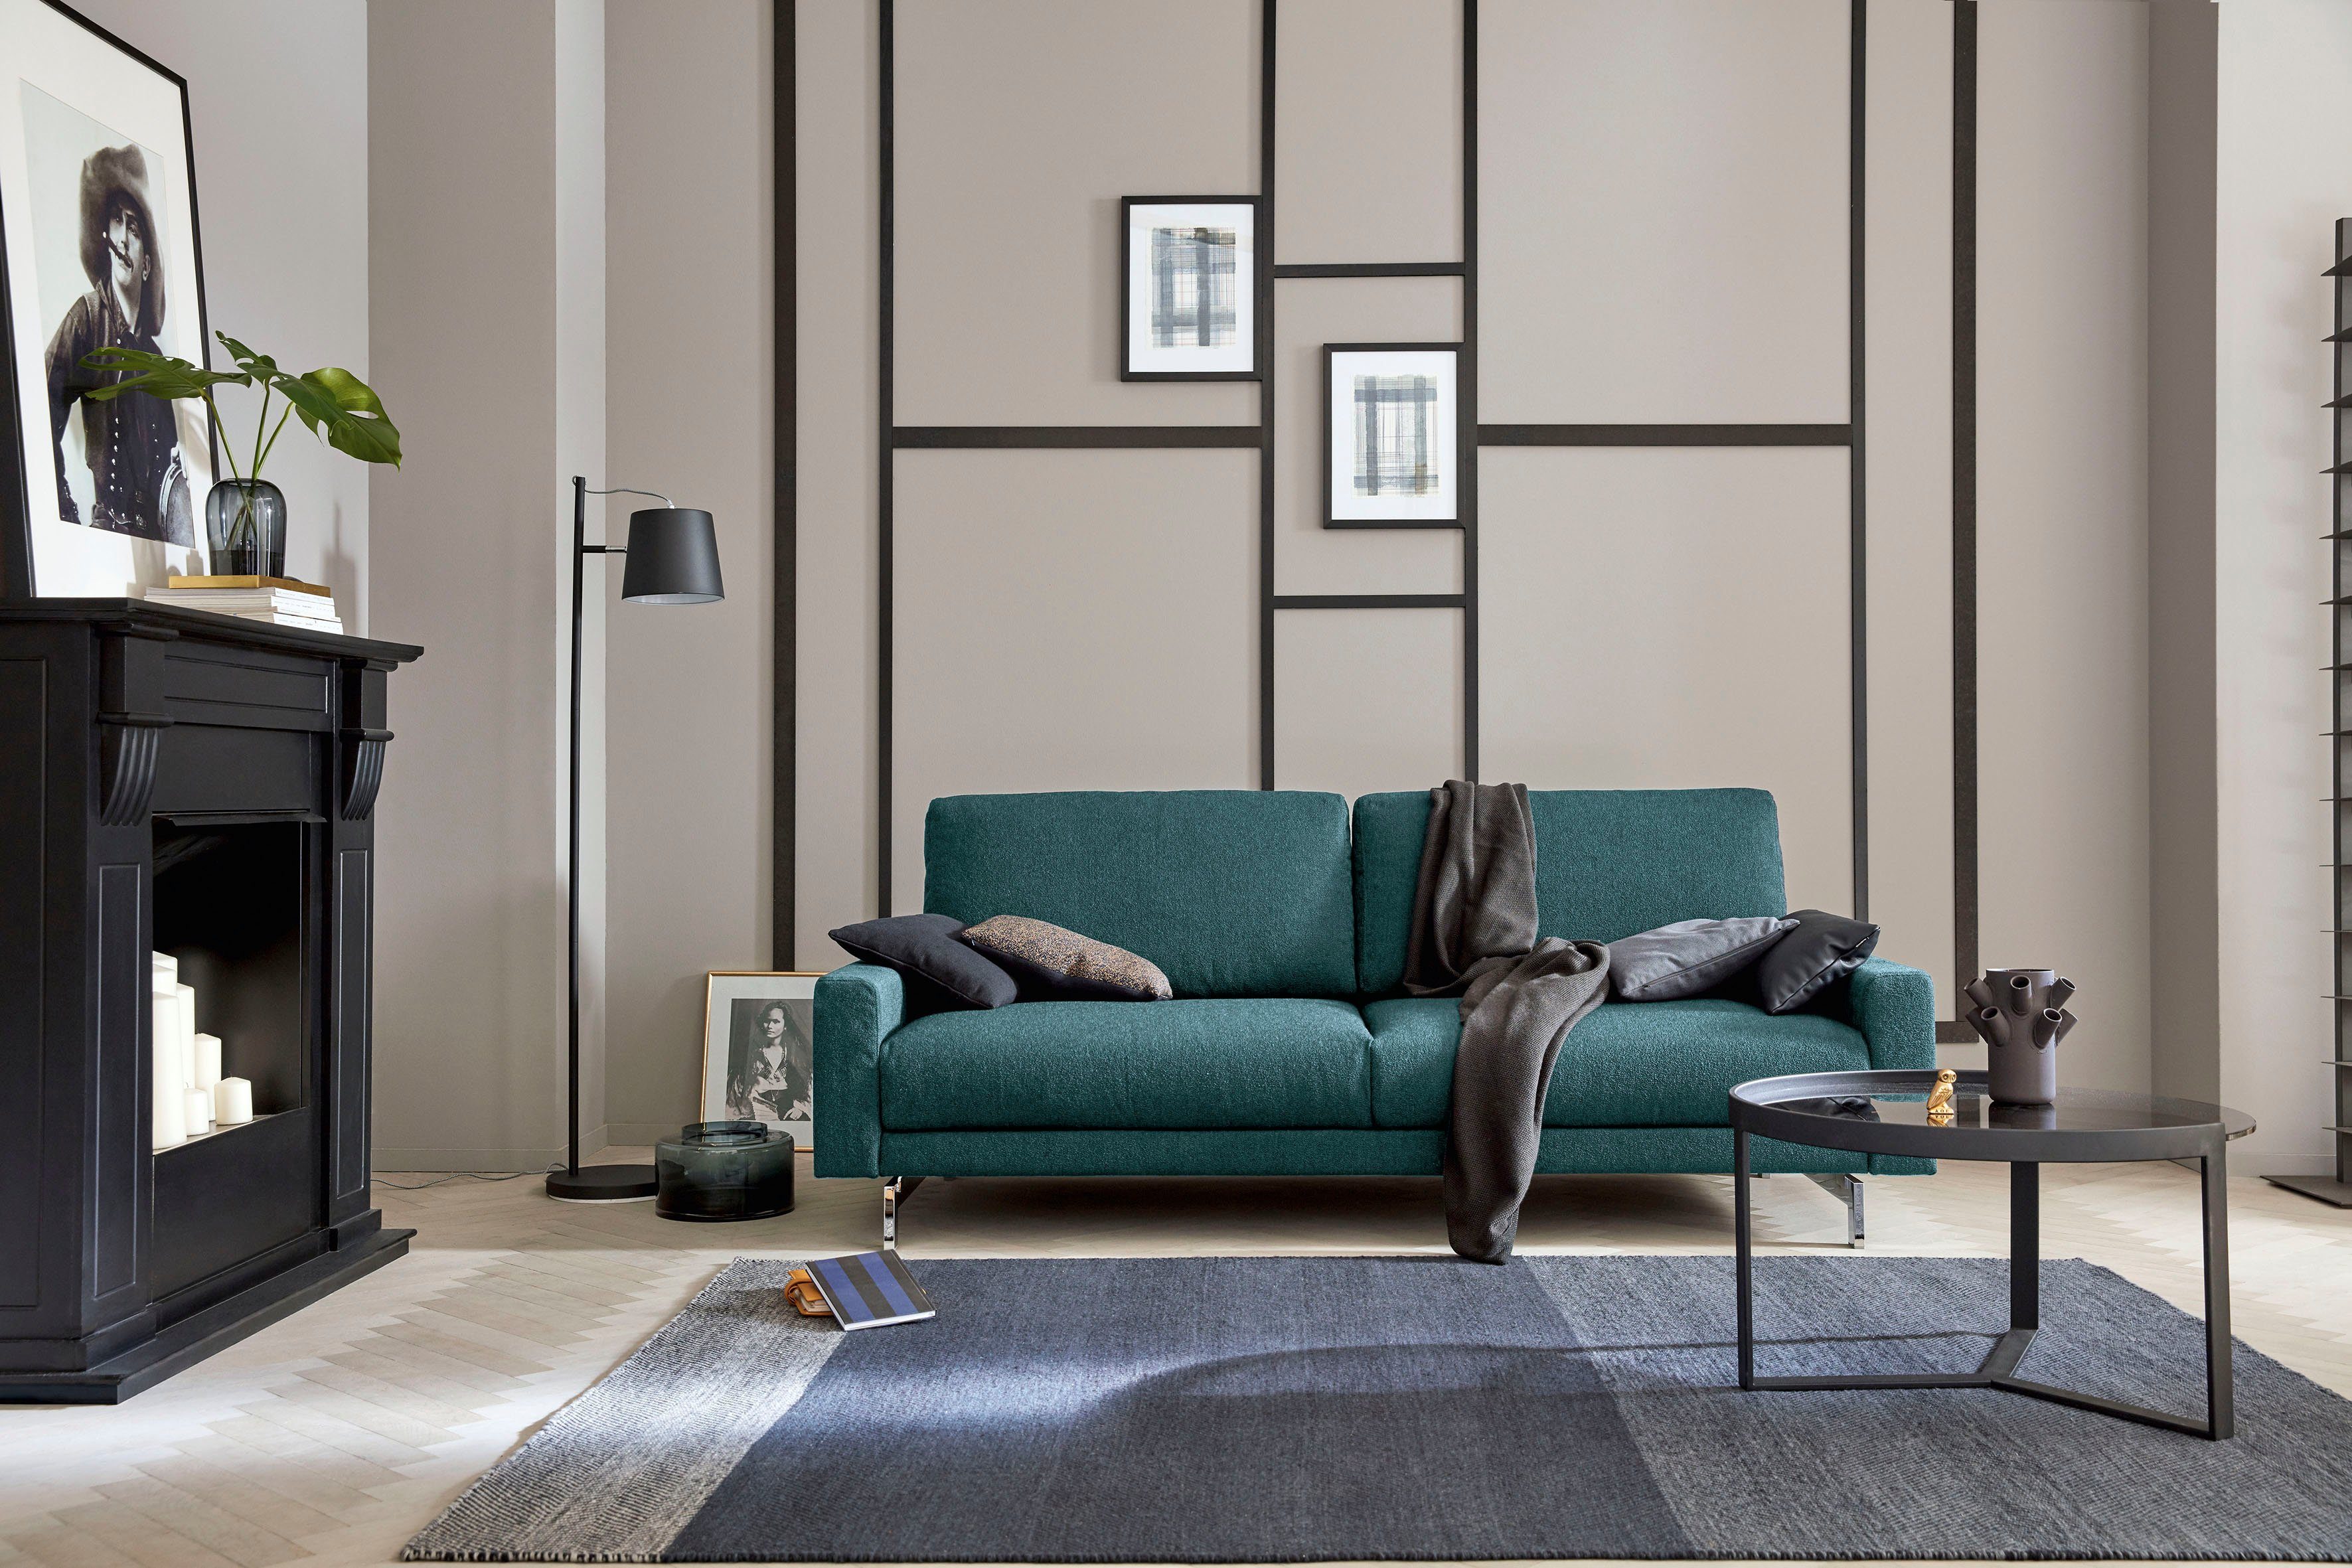 sofa 204 Fuß chromfarben cm 3-Sitzer hs.450, Breite niedrig, hülsta Armlehne glänzend,